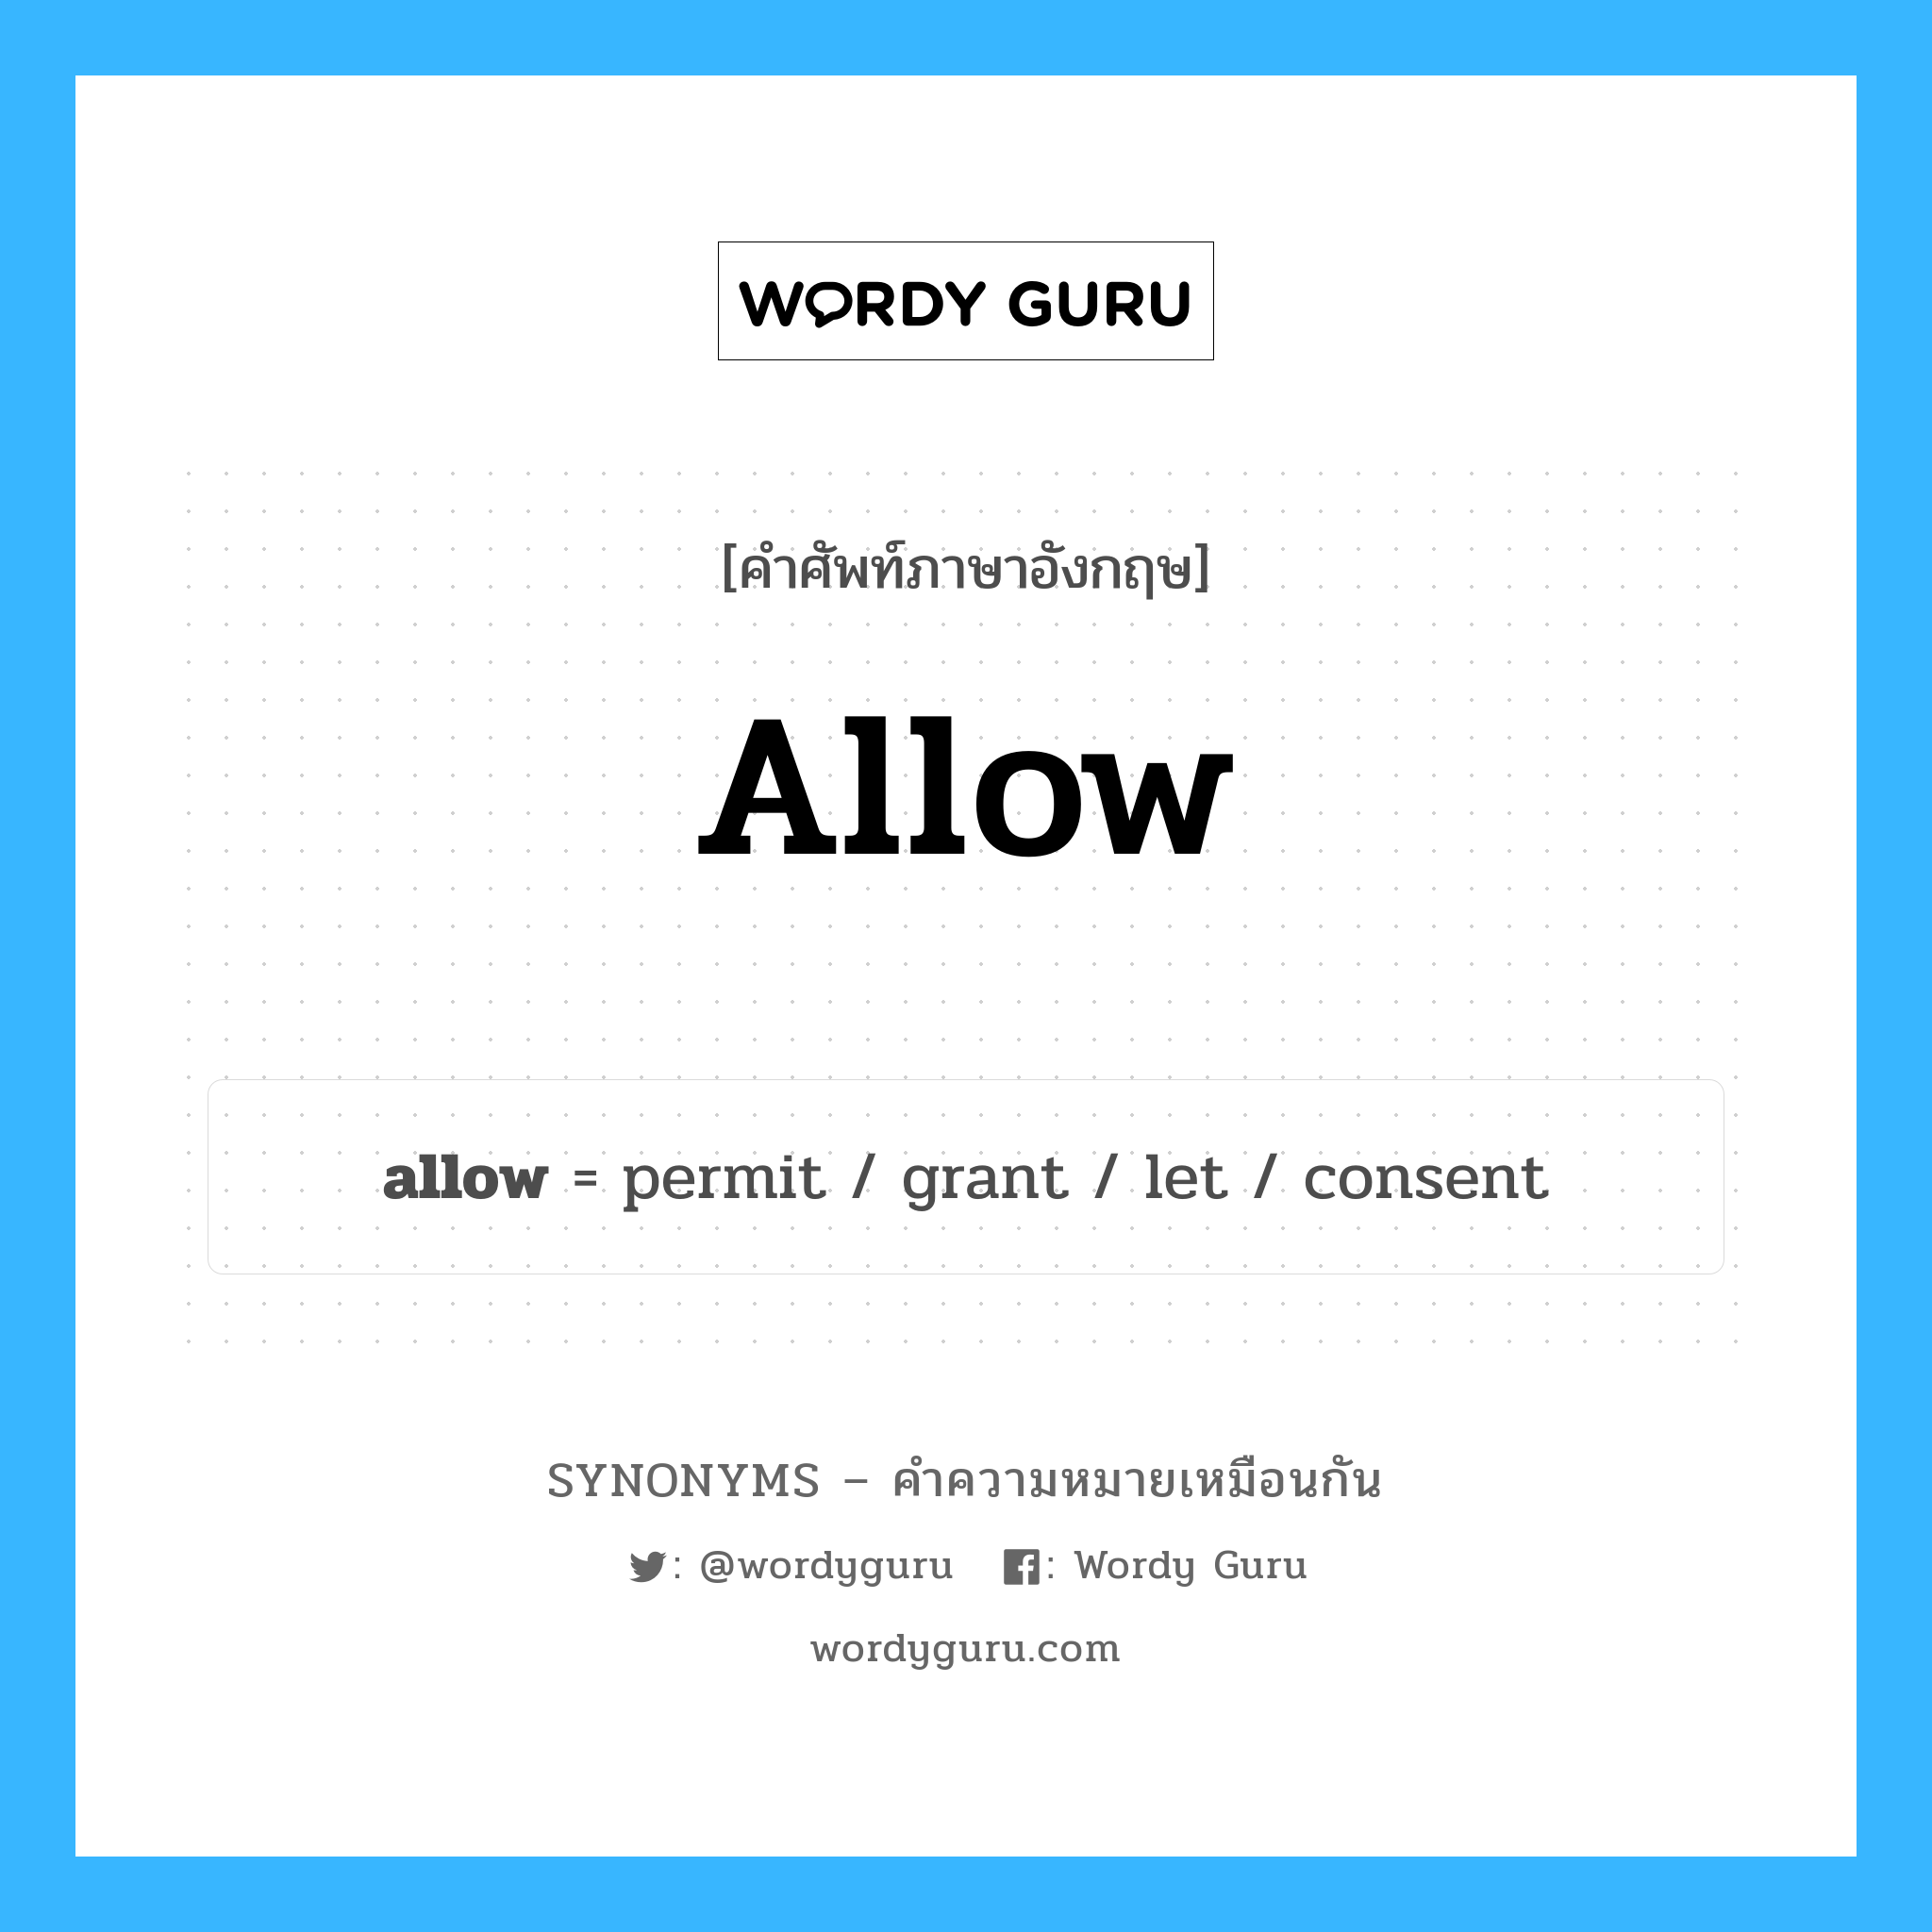 consent เป็นหนึ่งใน allow และมีคำอื่น ๆ อีกดังนี้, คำศัพท์ภาษาอังกฤษ consent ความหมายคล้ายกันกับ allow แปลว่า ความยินยอม หมวด allow